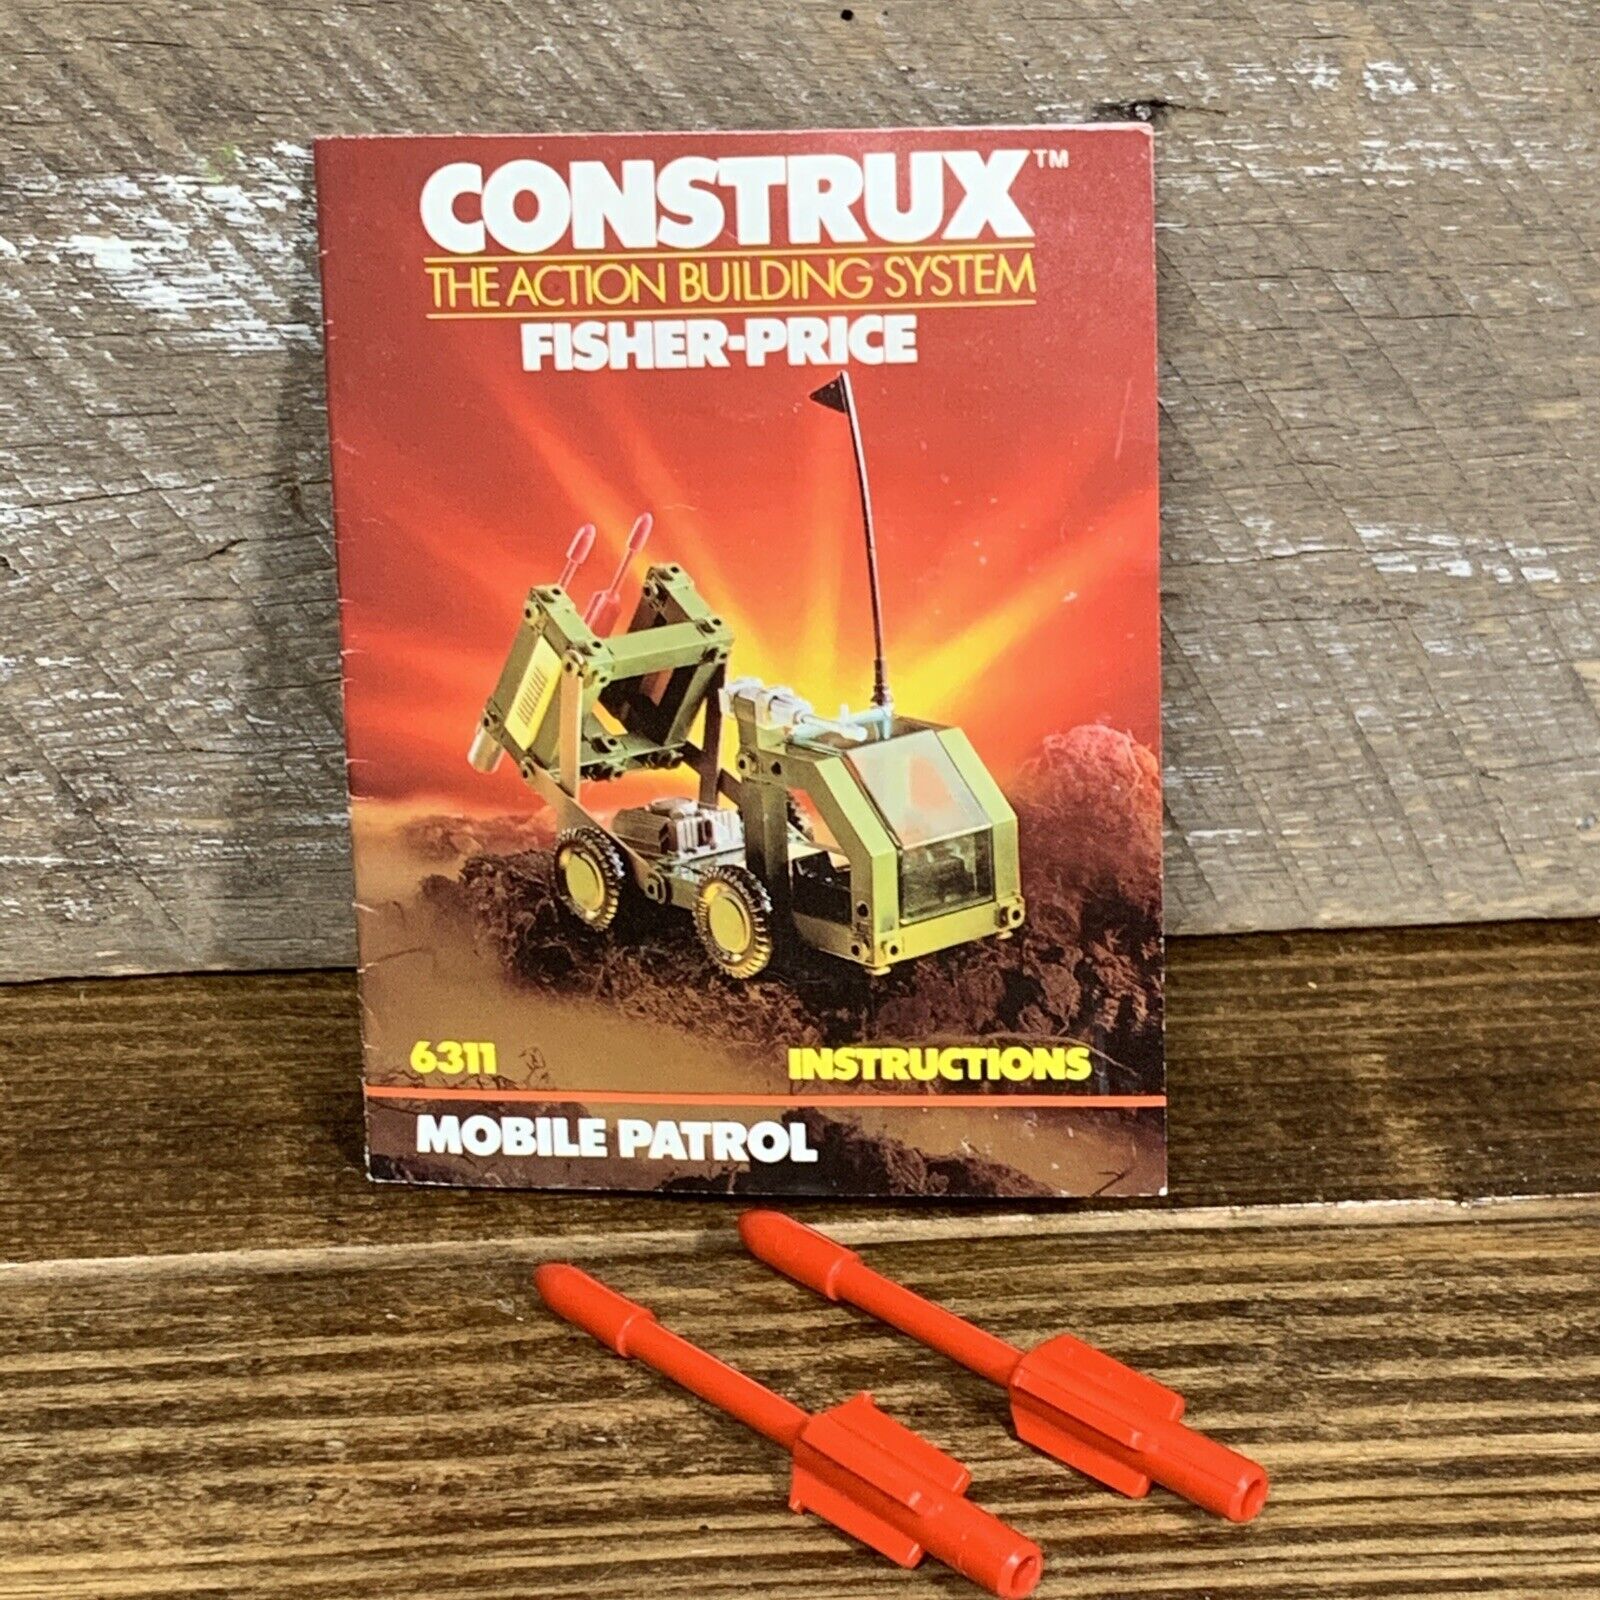 Vintage Construx Fisher Price #6311 Mobile Patrol Instructions & Rockets Parts